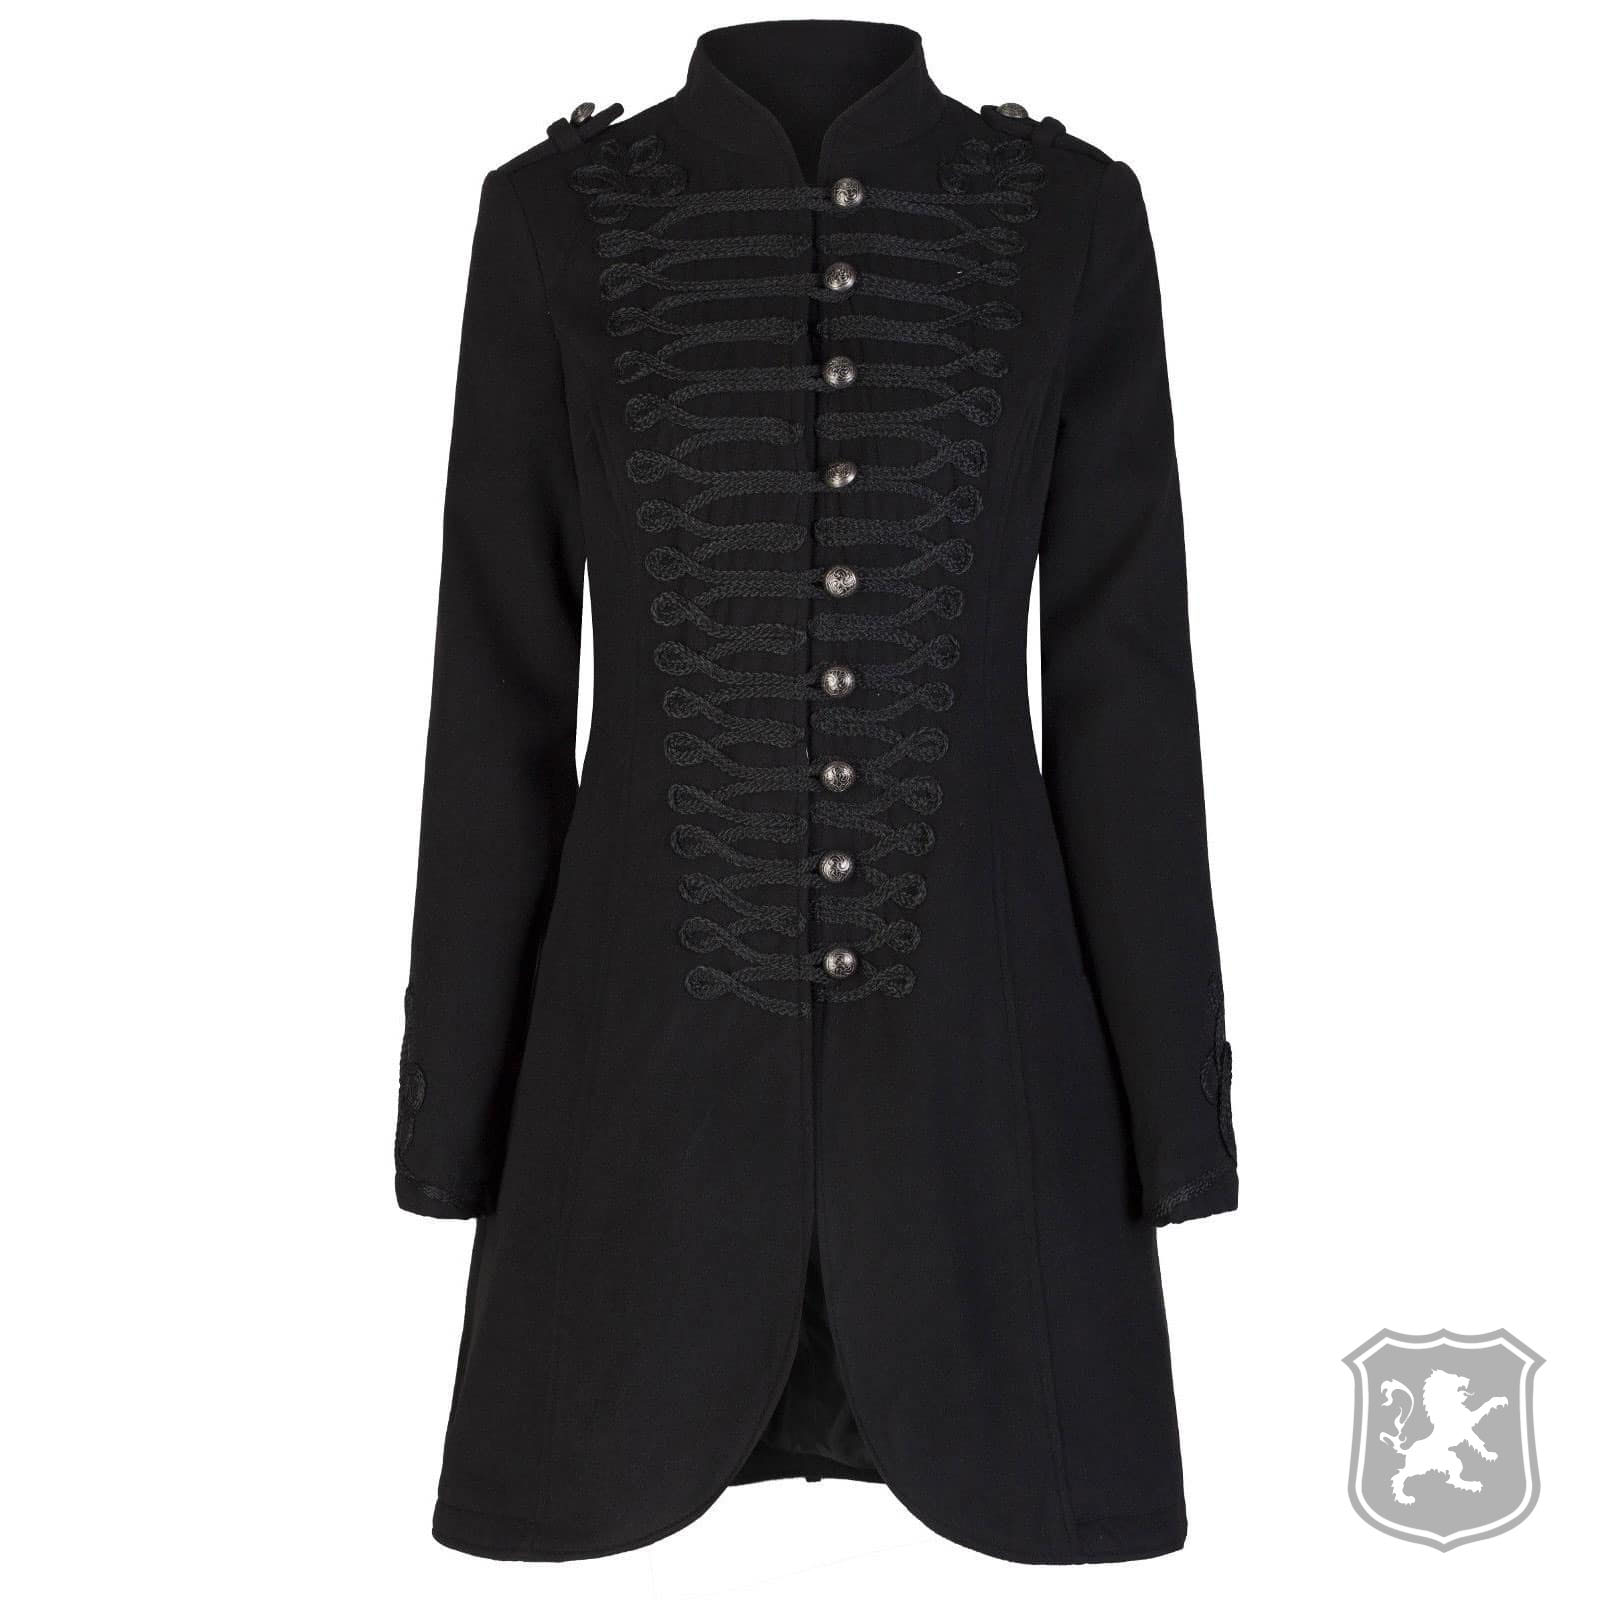 Punk Rave Gothic Women One-arm Long Sleeve Rivet Short Coat Black Soldier Jacket